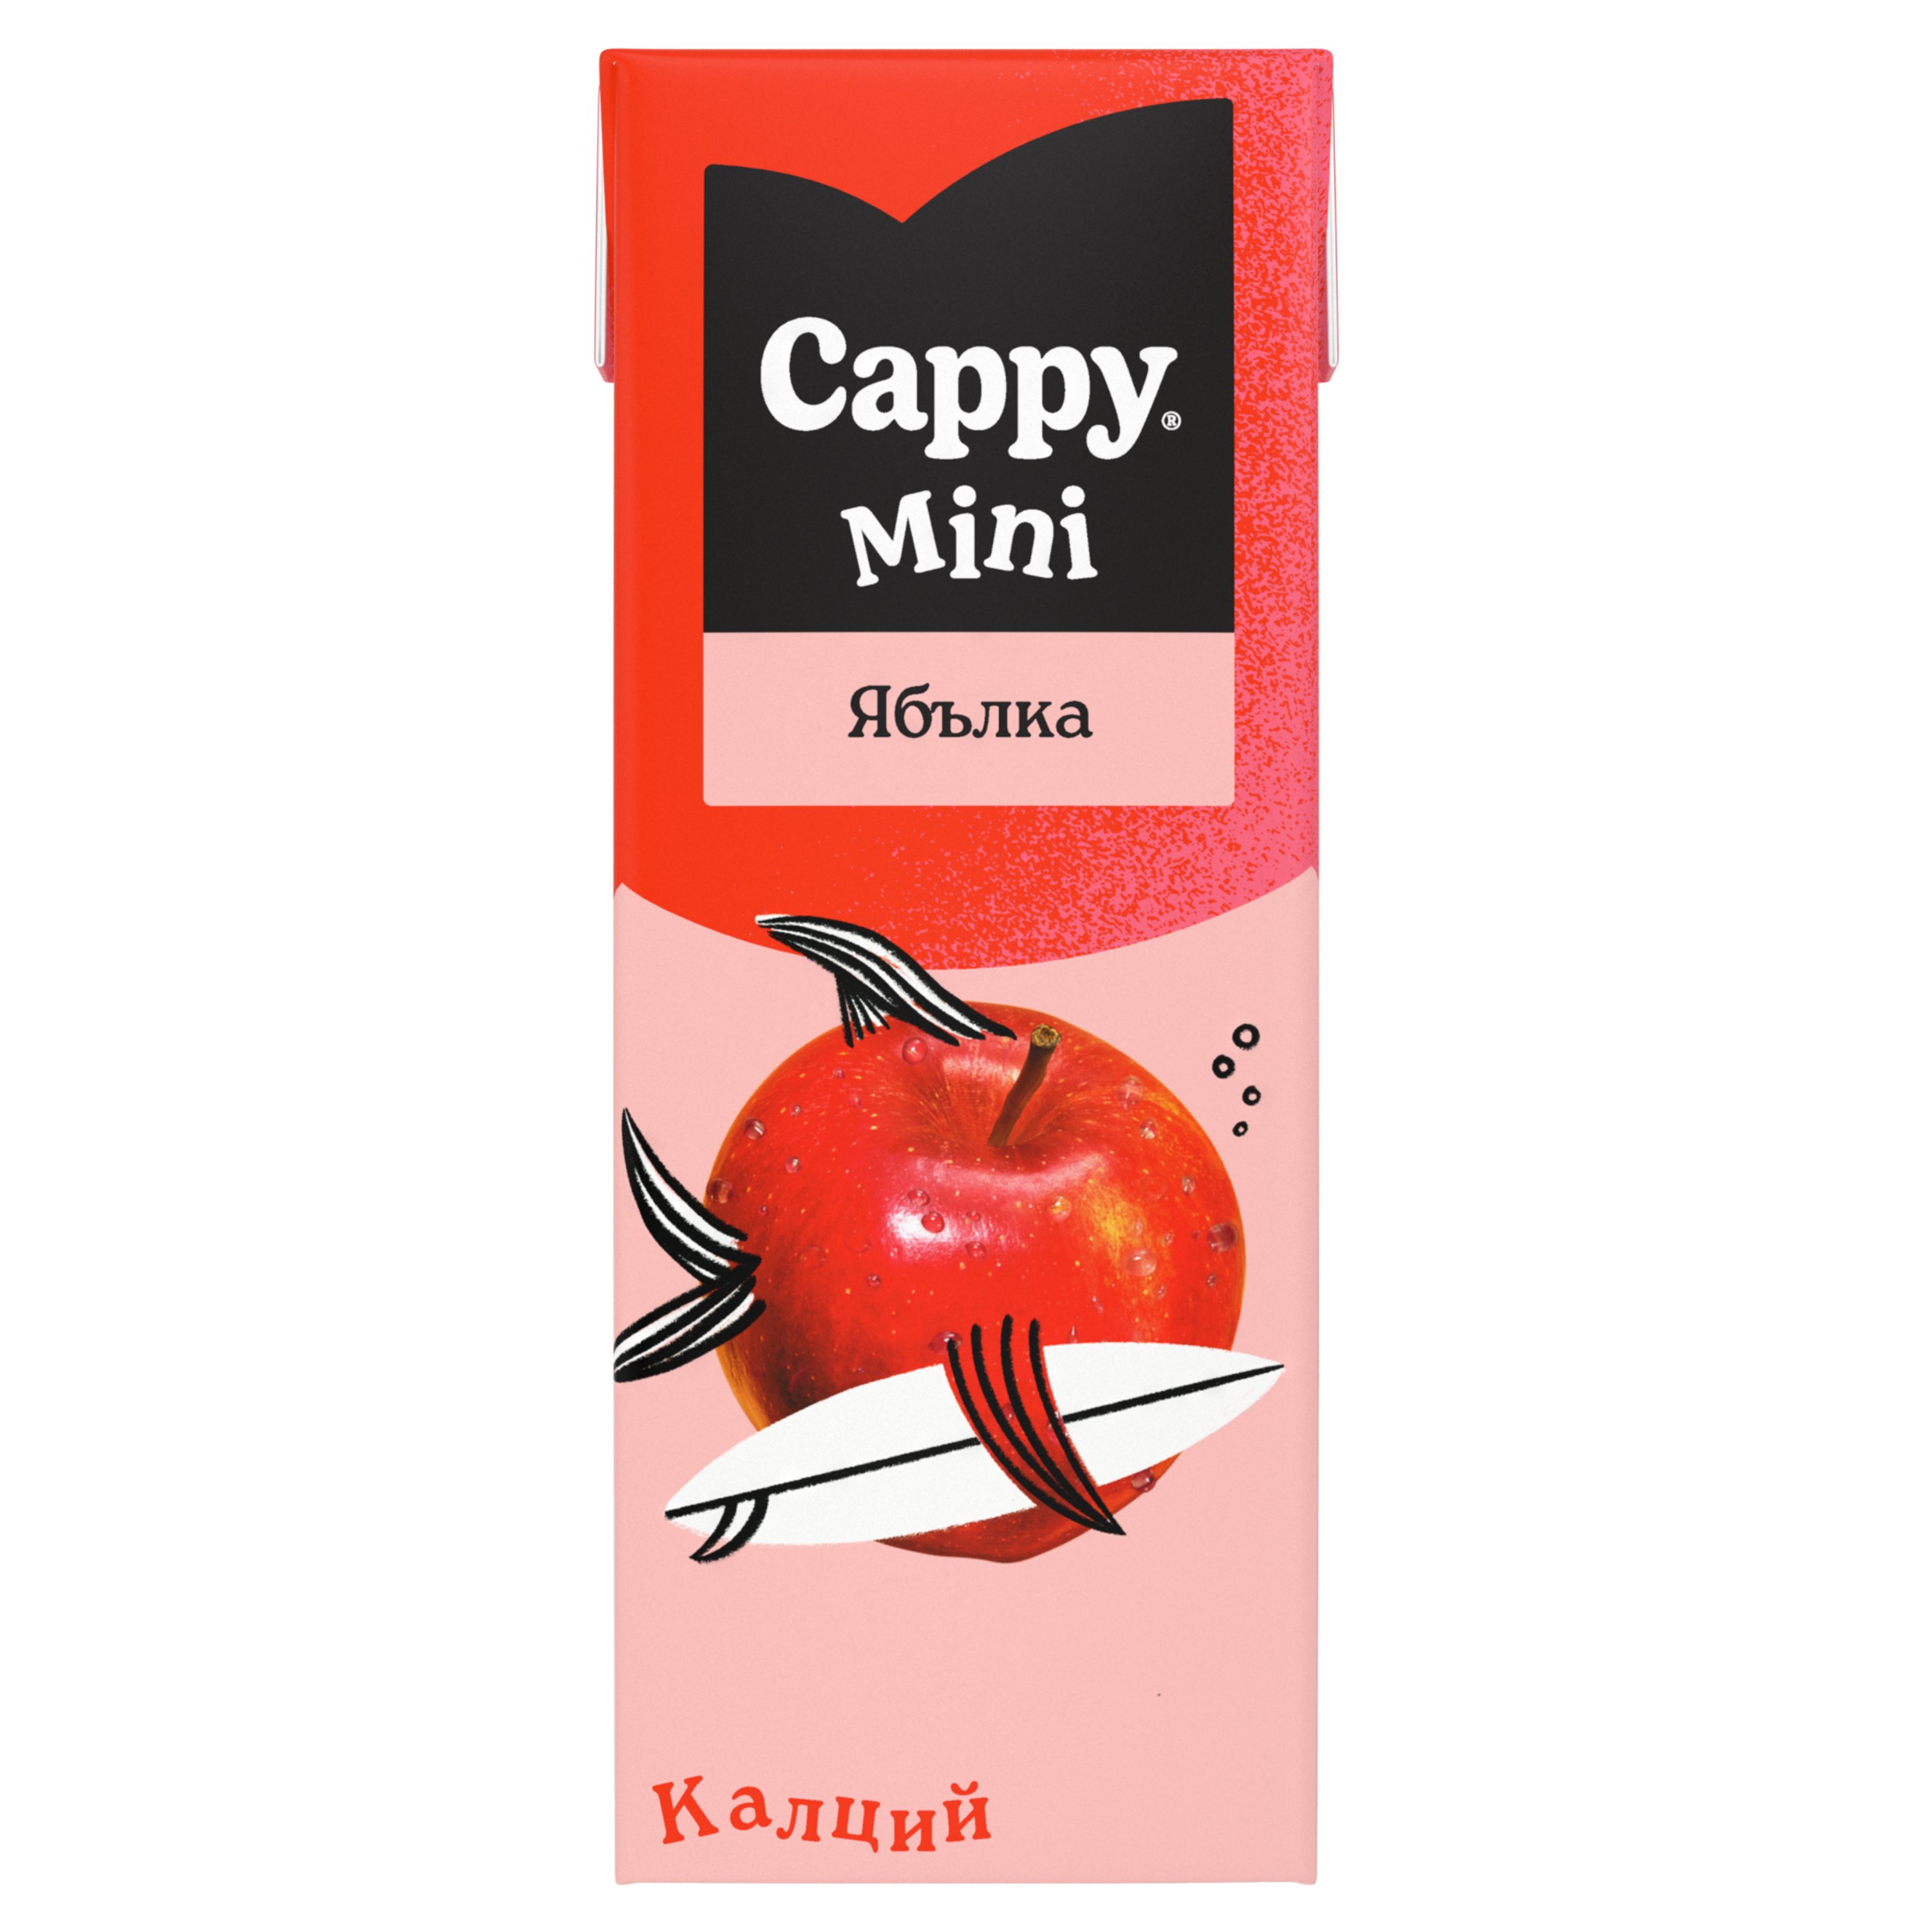 Cappy KIDS Ябълка